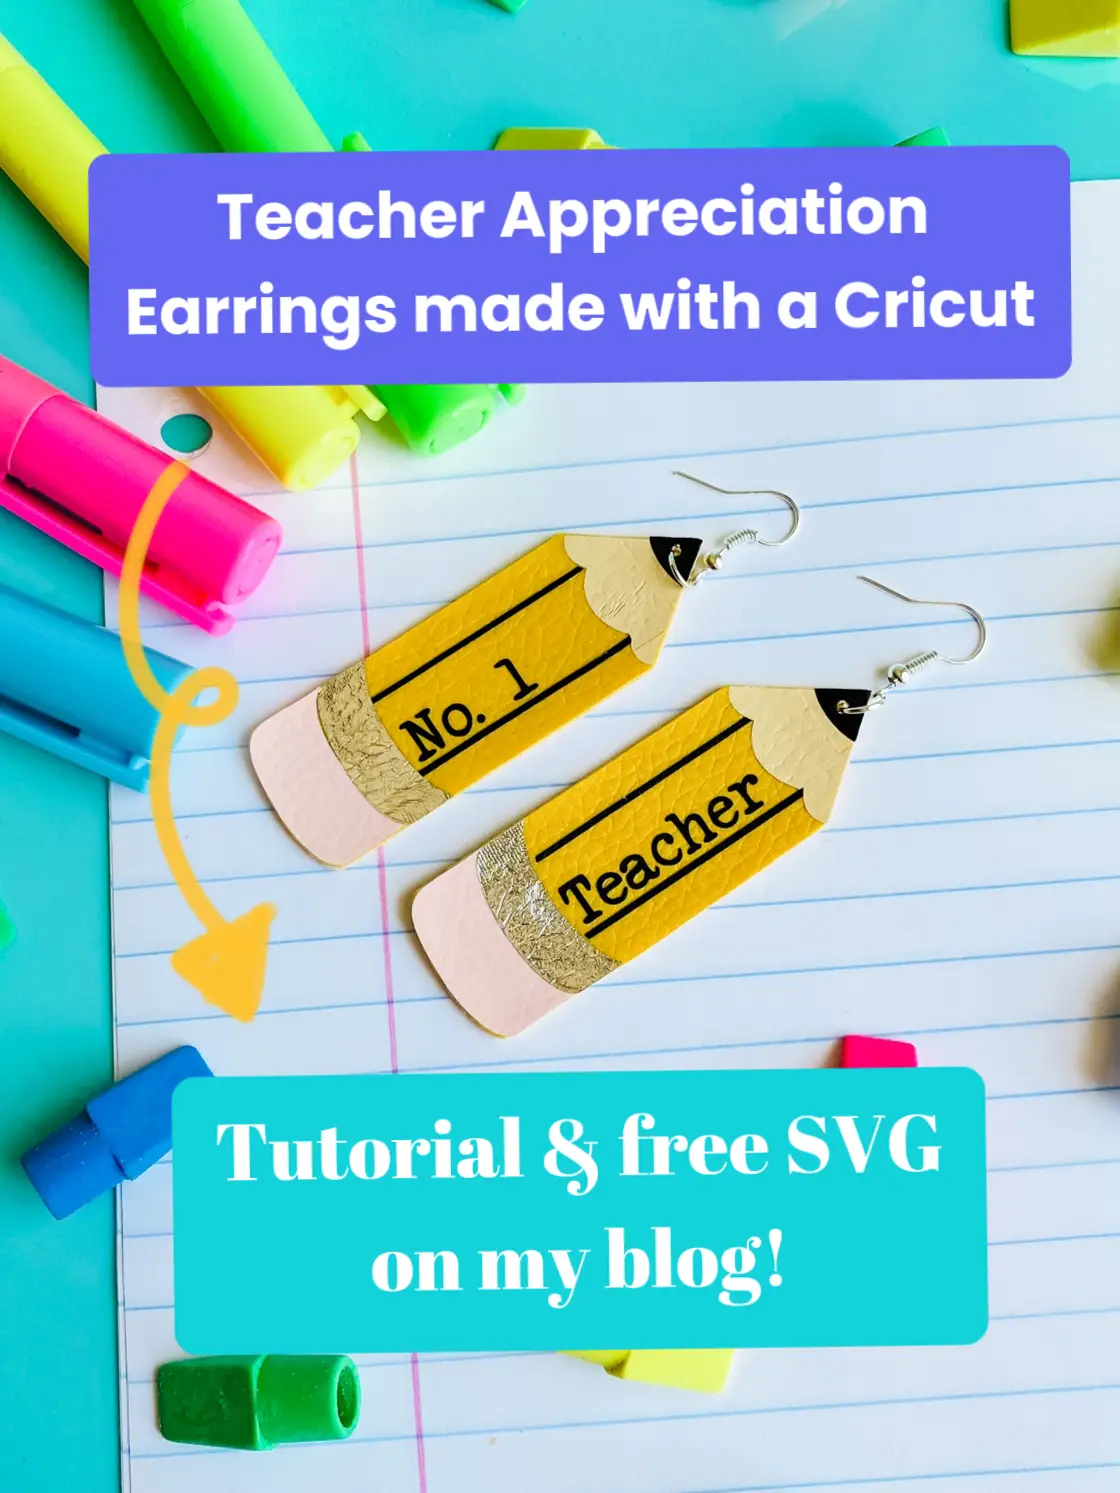 Five teacher gift ideas you can make with your Cricut - Cricut UK Blog